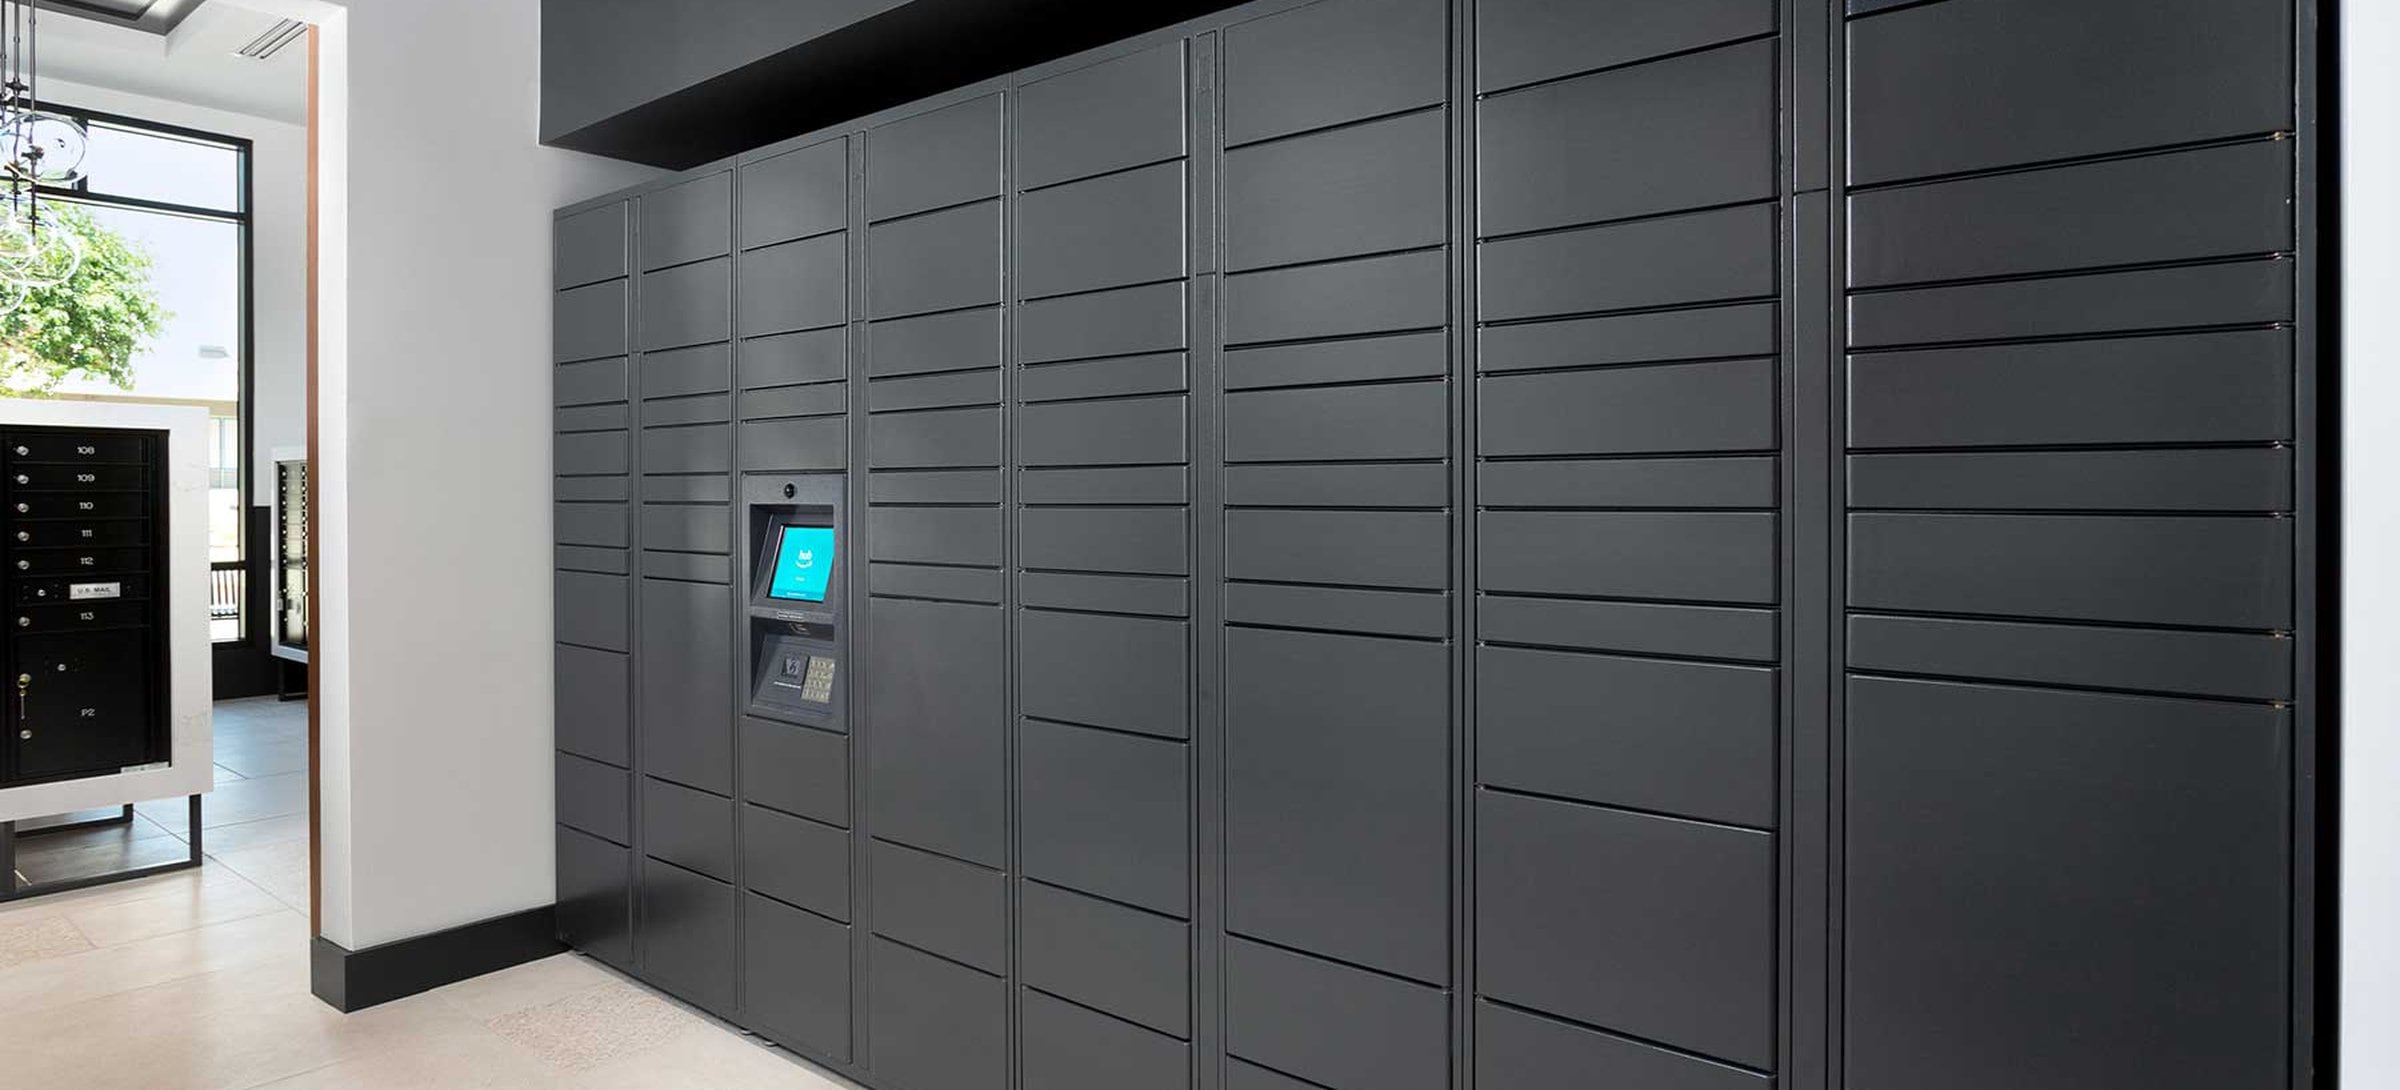 Amazon HUB package lockers